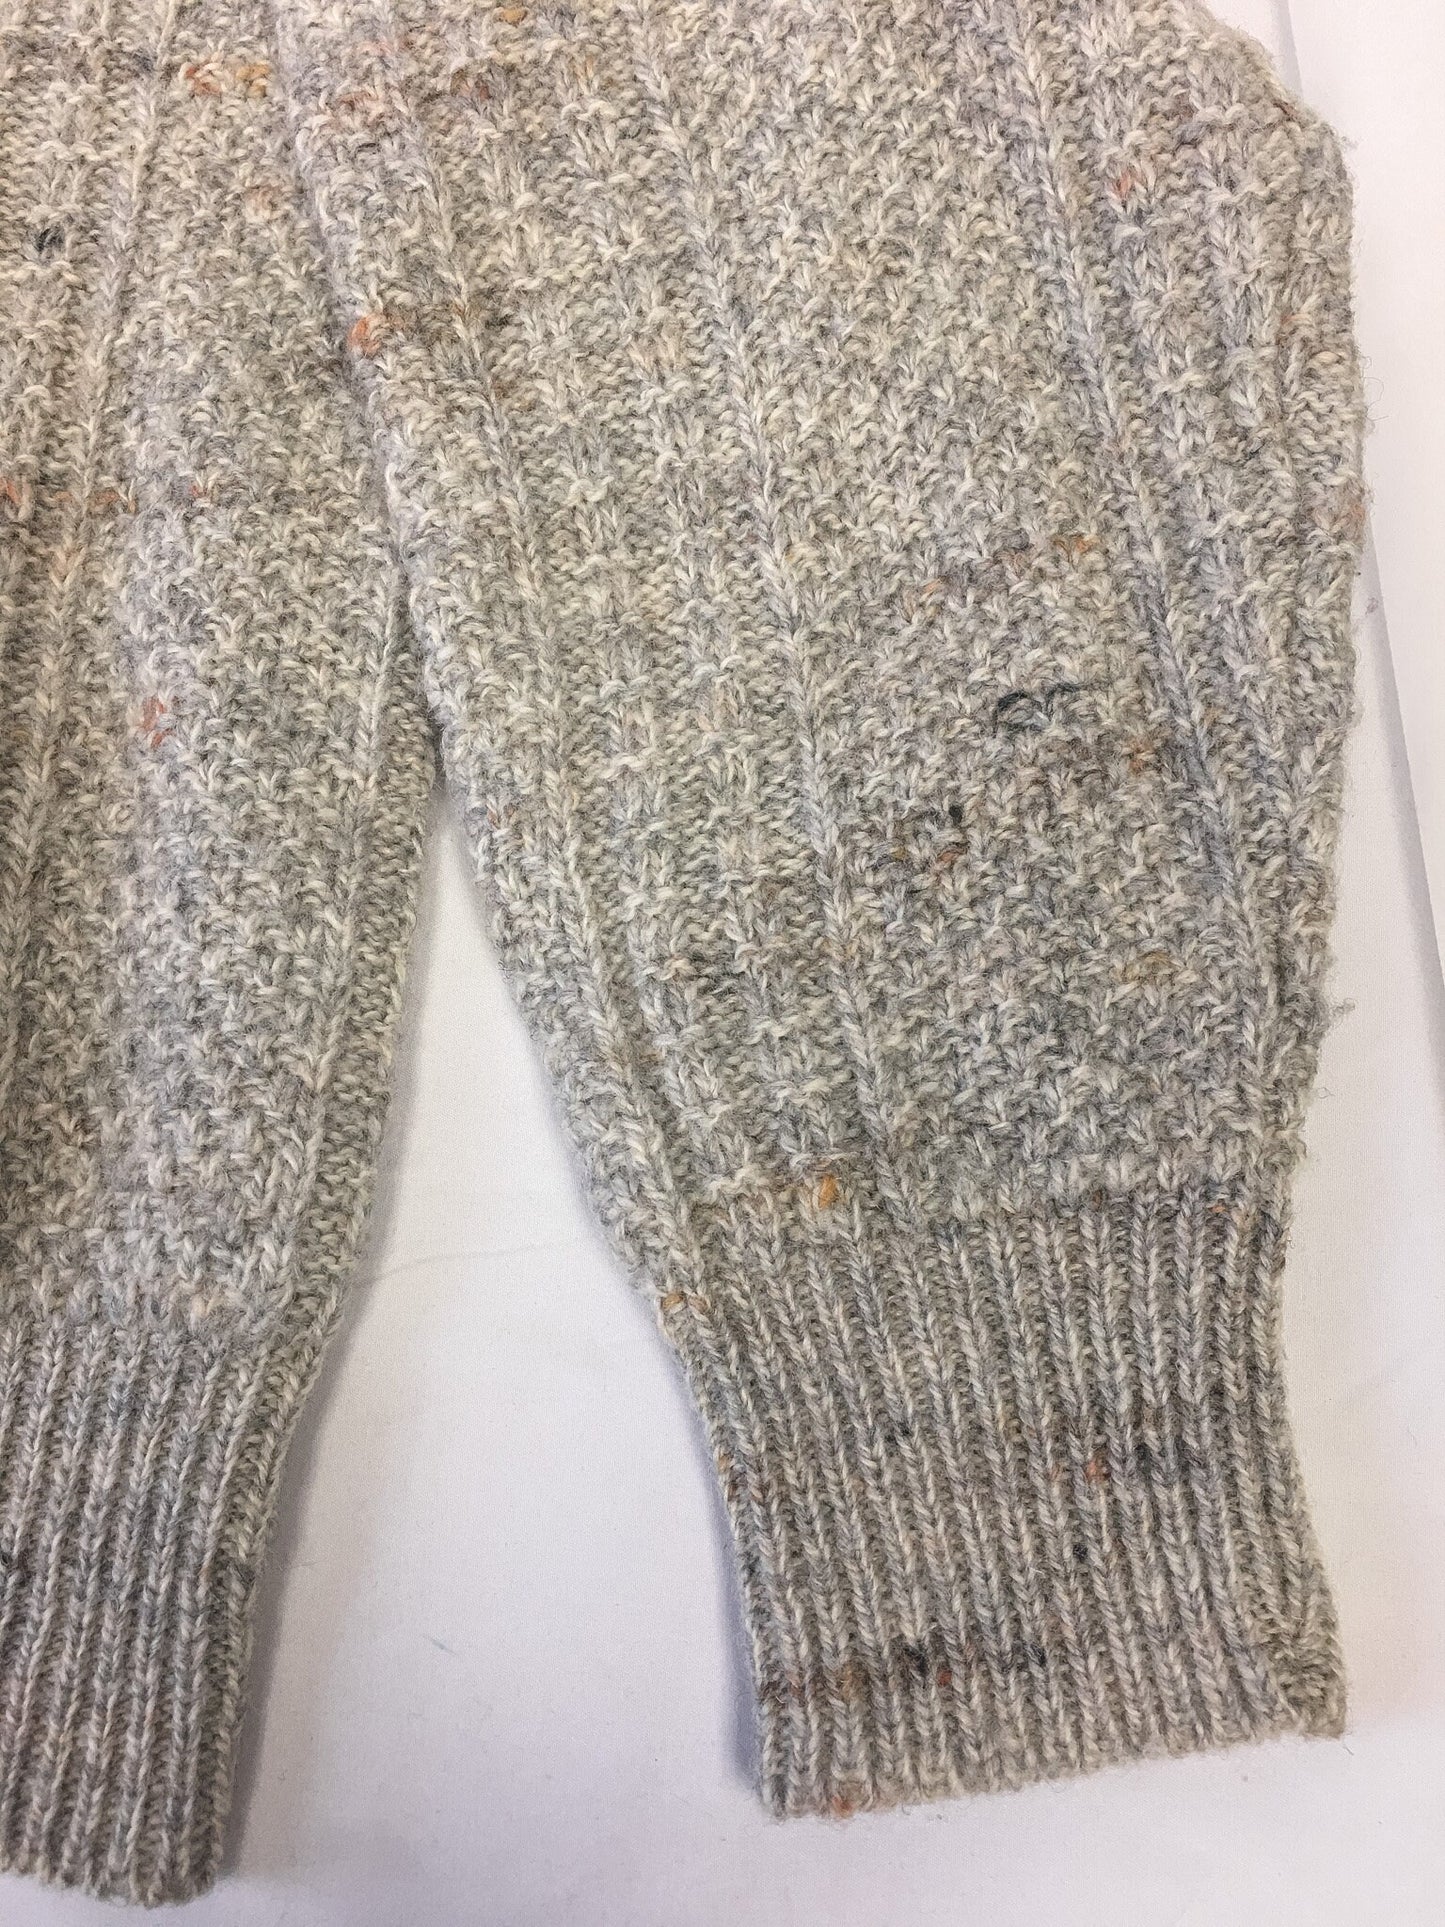 Vintage 70s Pendleton Neutral Wool V-Neck Knit Sweater, Sz. M